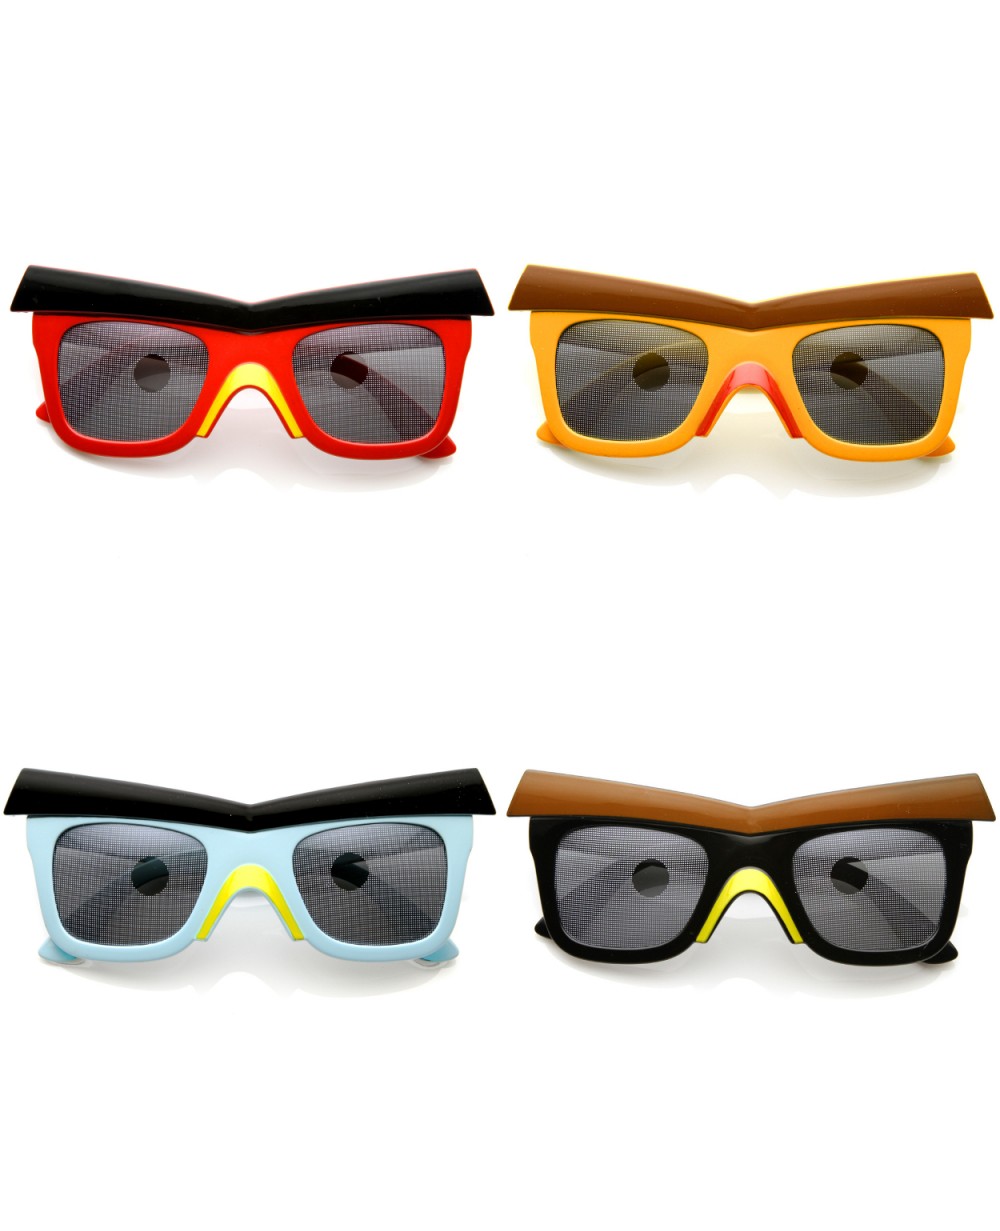 Beak Sunglasses4 12 Unusual Sunglasses trends - 43